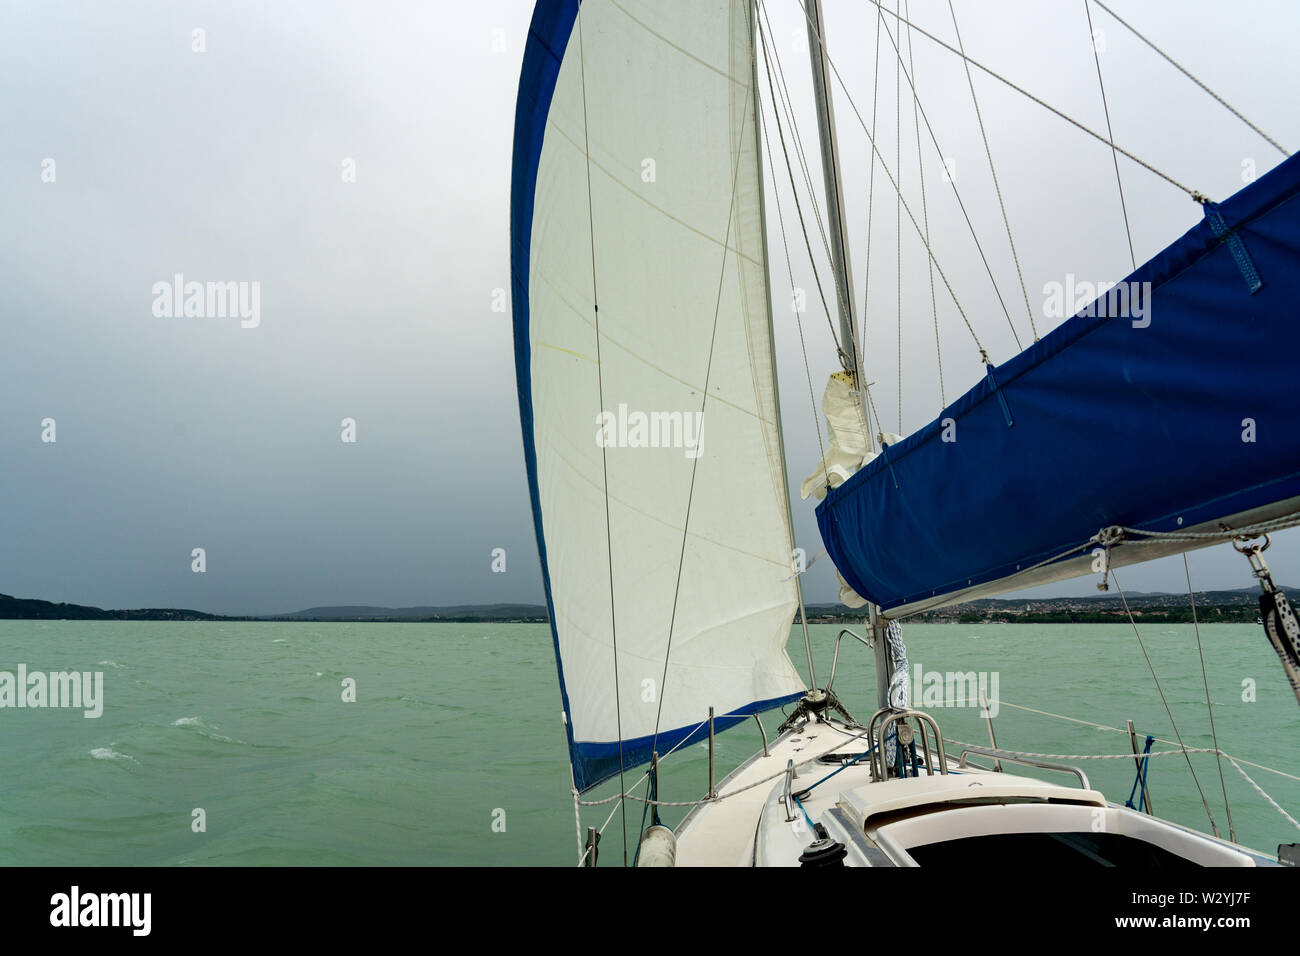 Sailboat on the lake Balaton ship prow view Stock Photo